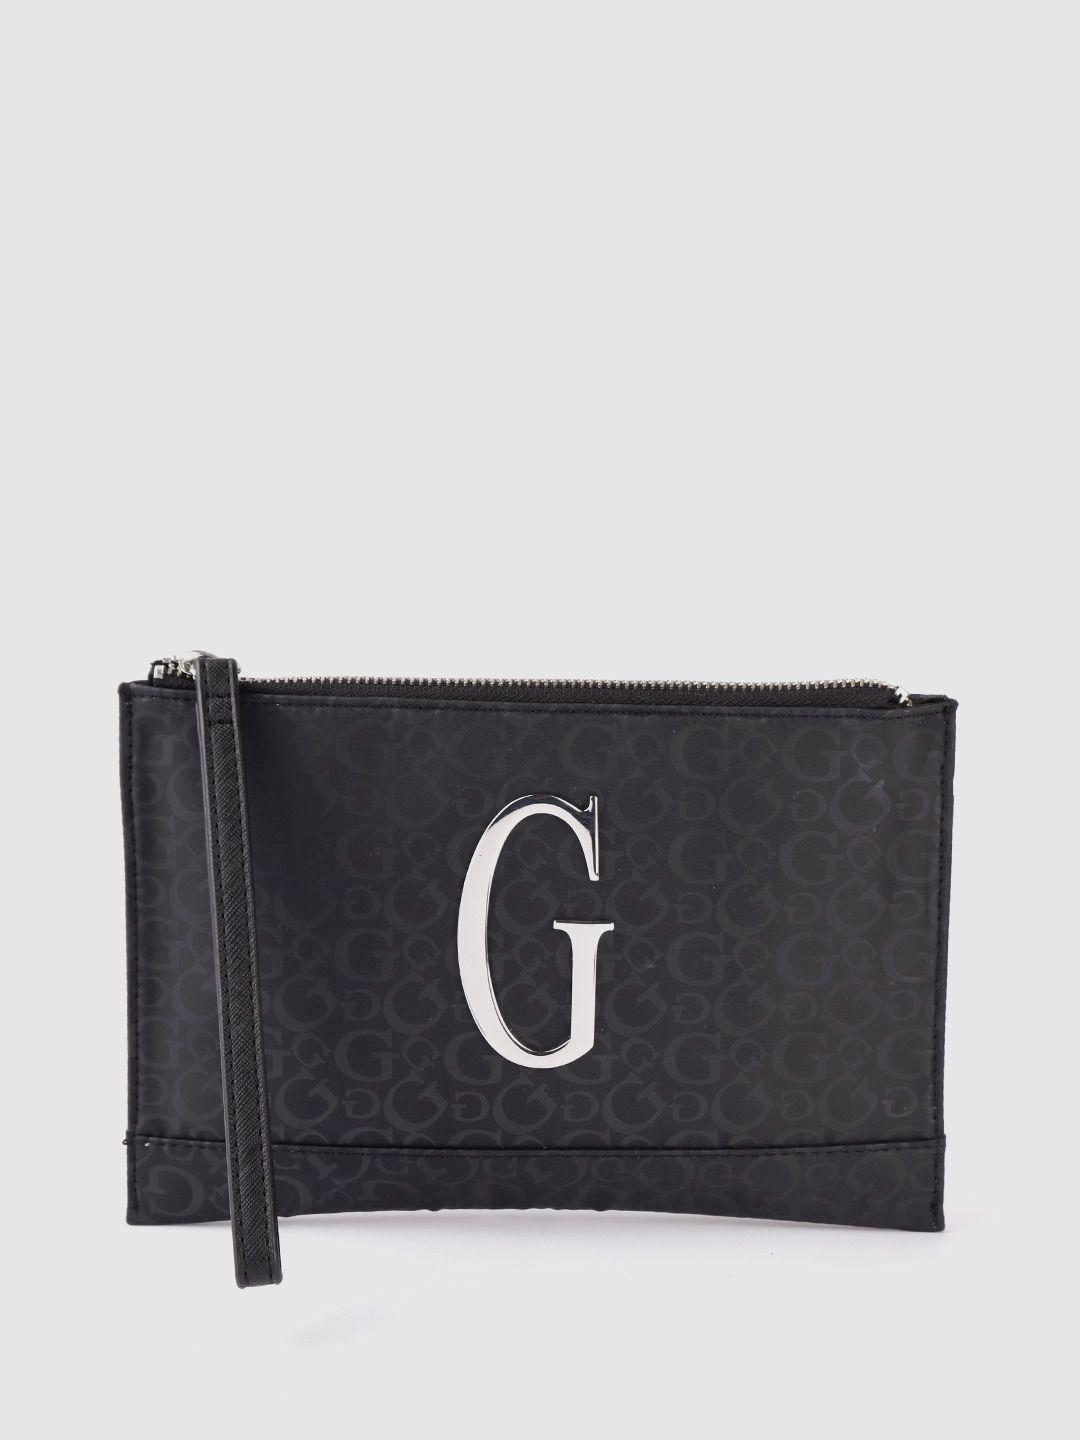 guess black brand logo printed purse with wrist loop